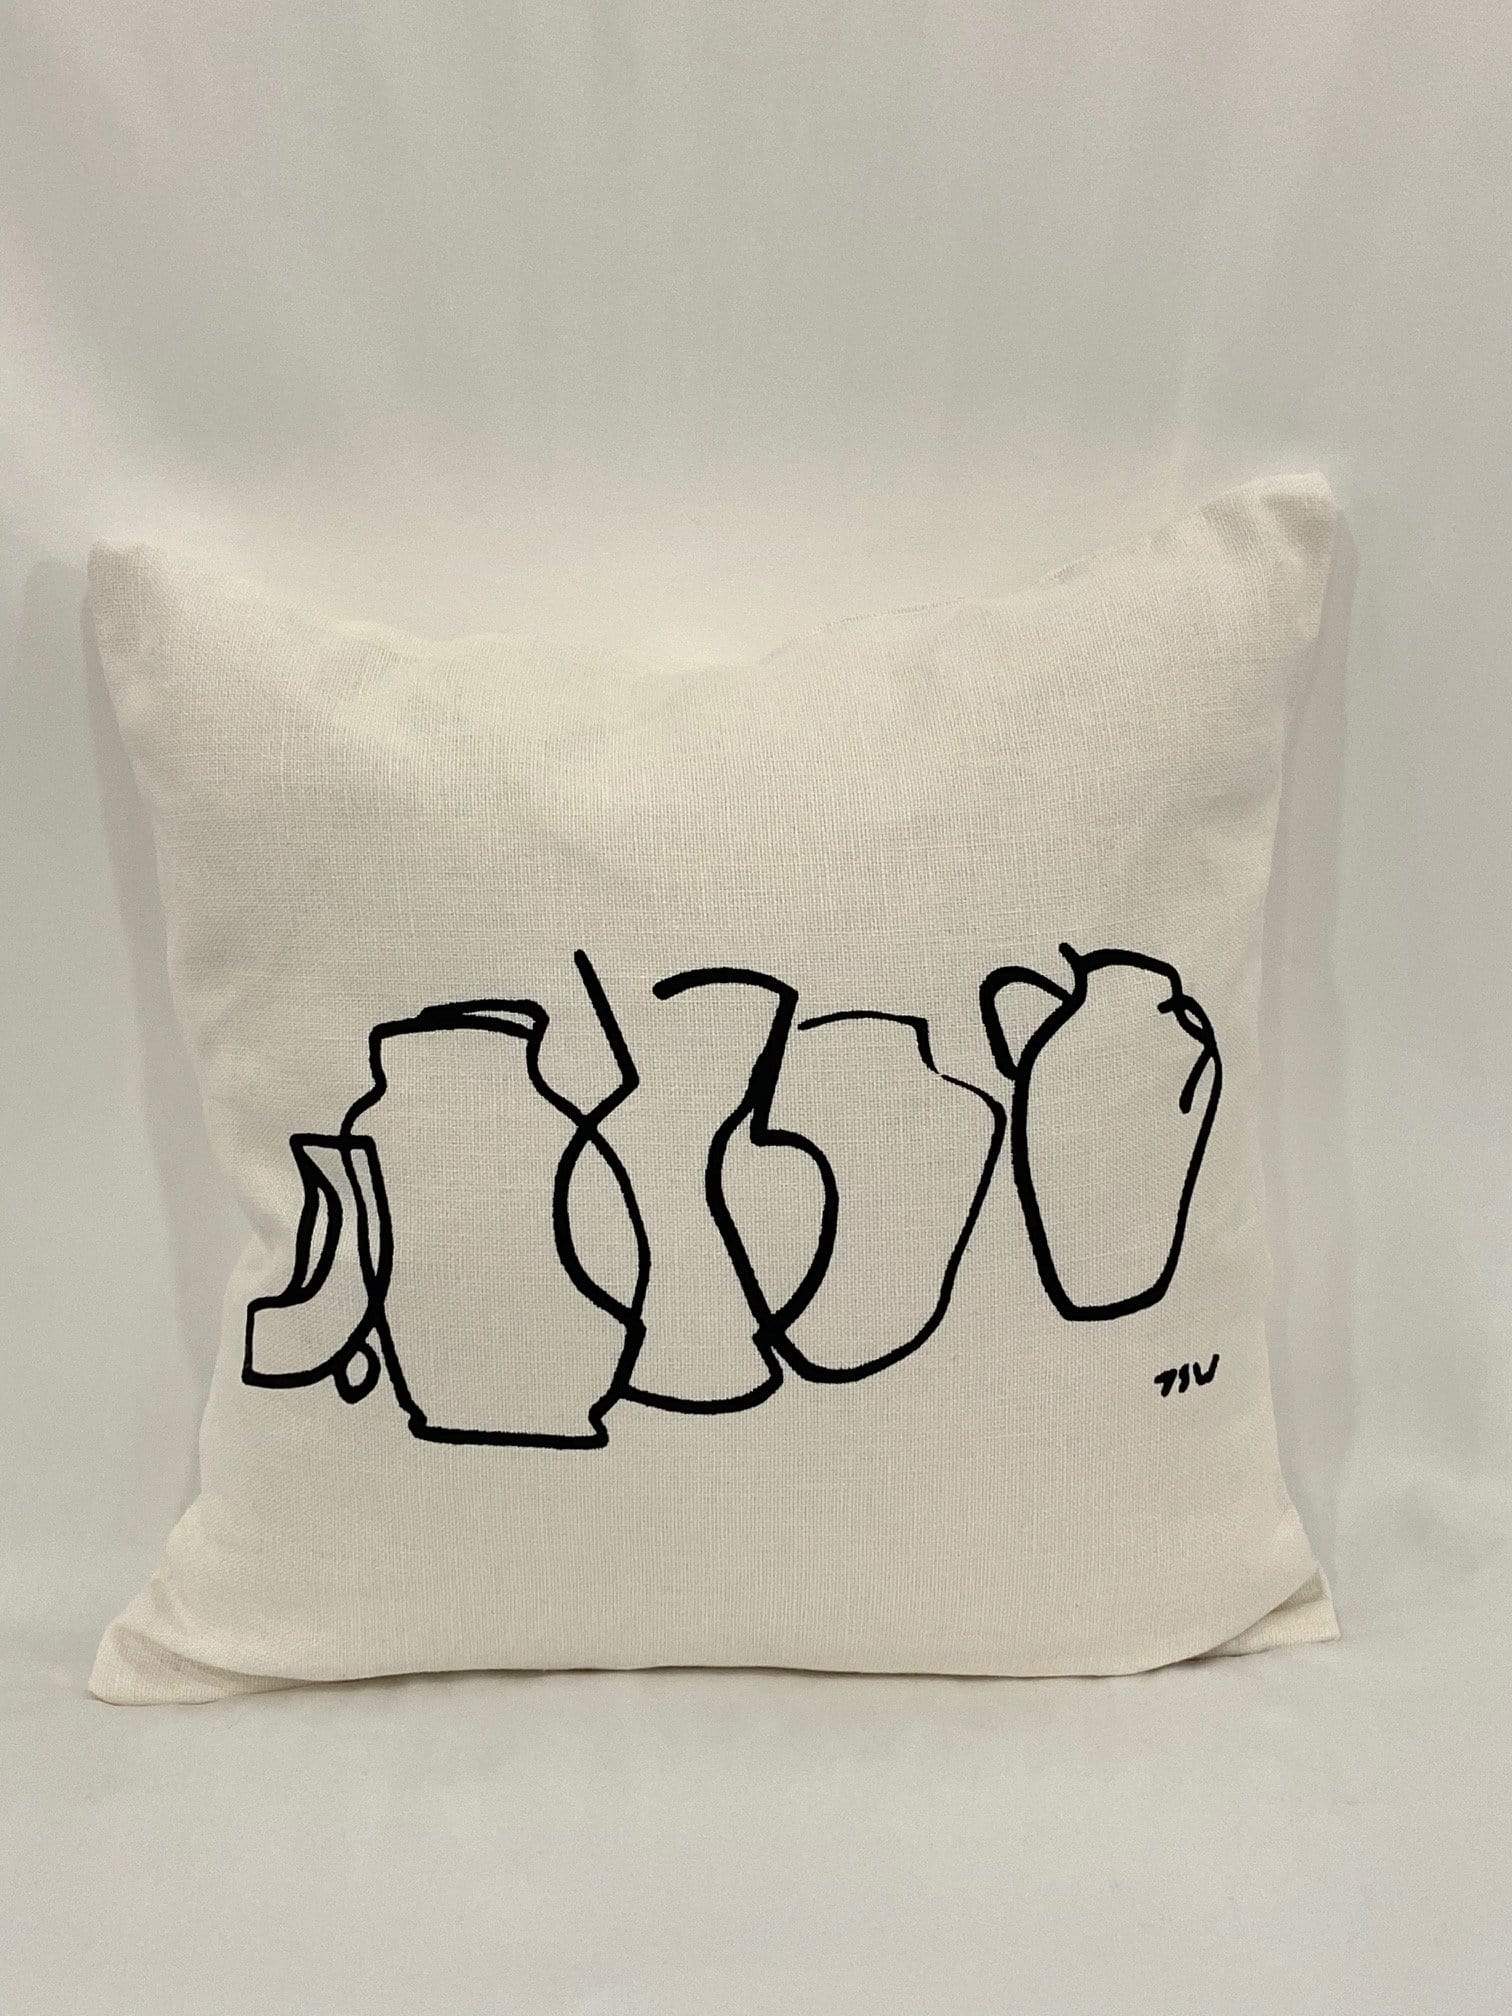 By James Wilson Artist, Ceramics, 100% Linen Cushion Cover